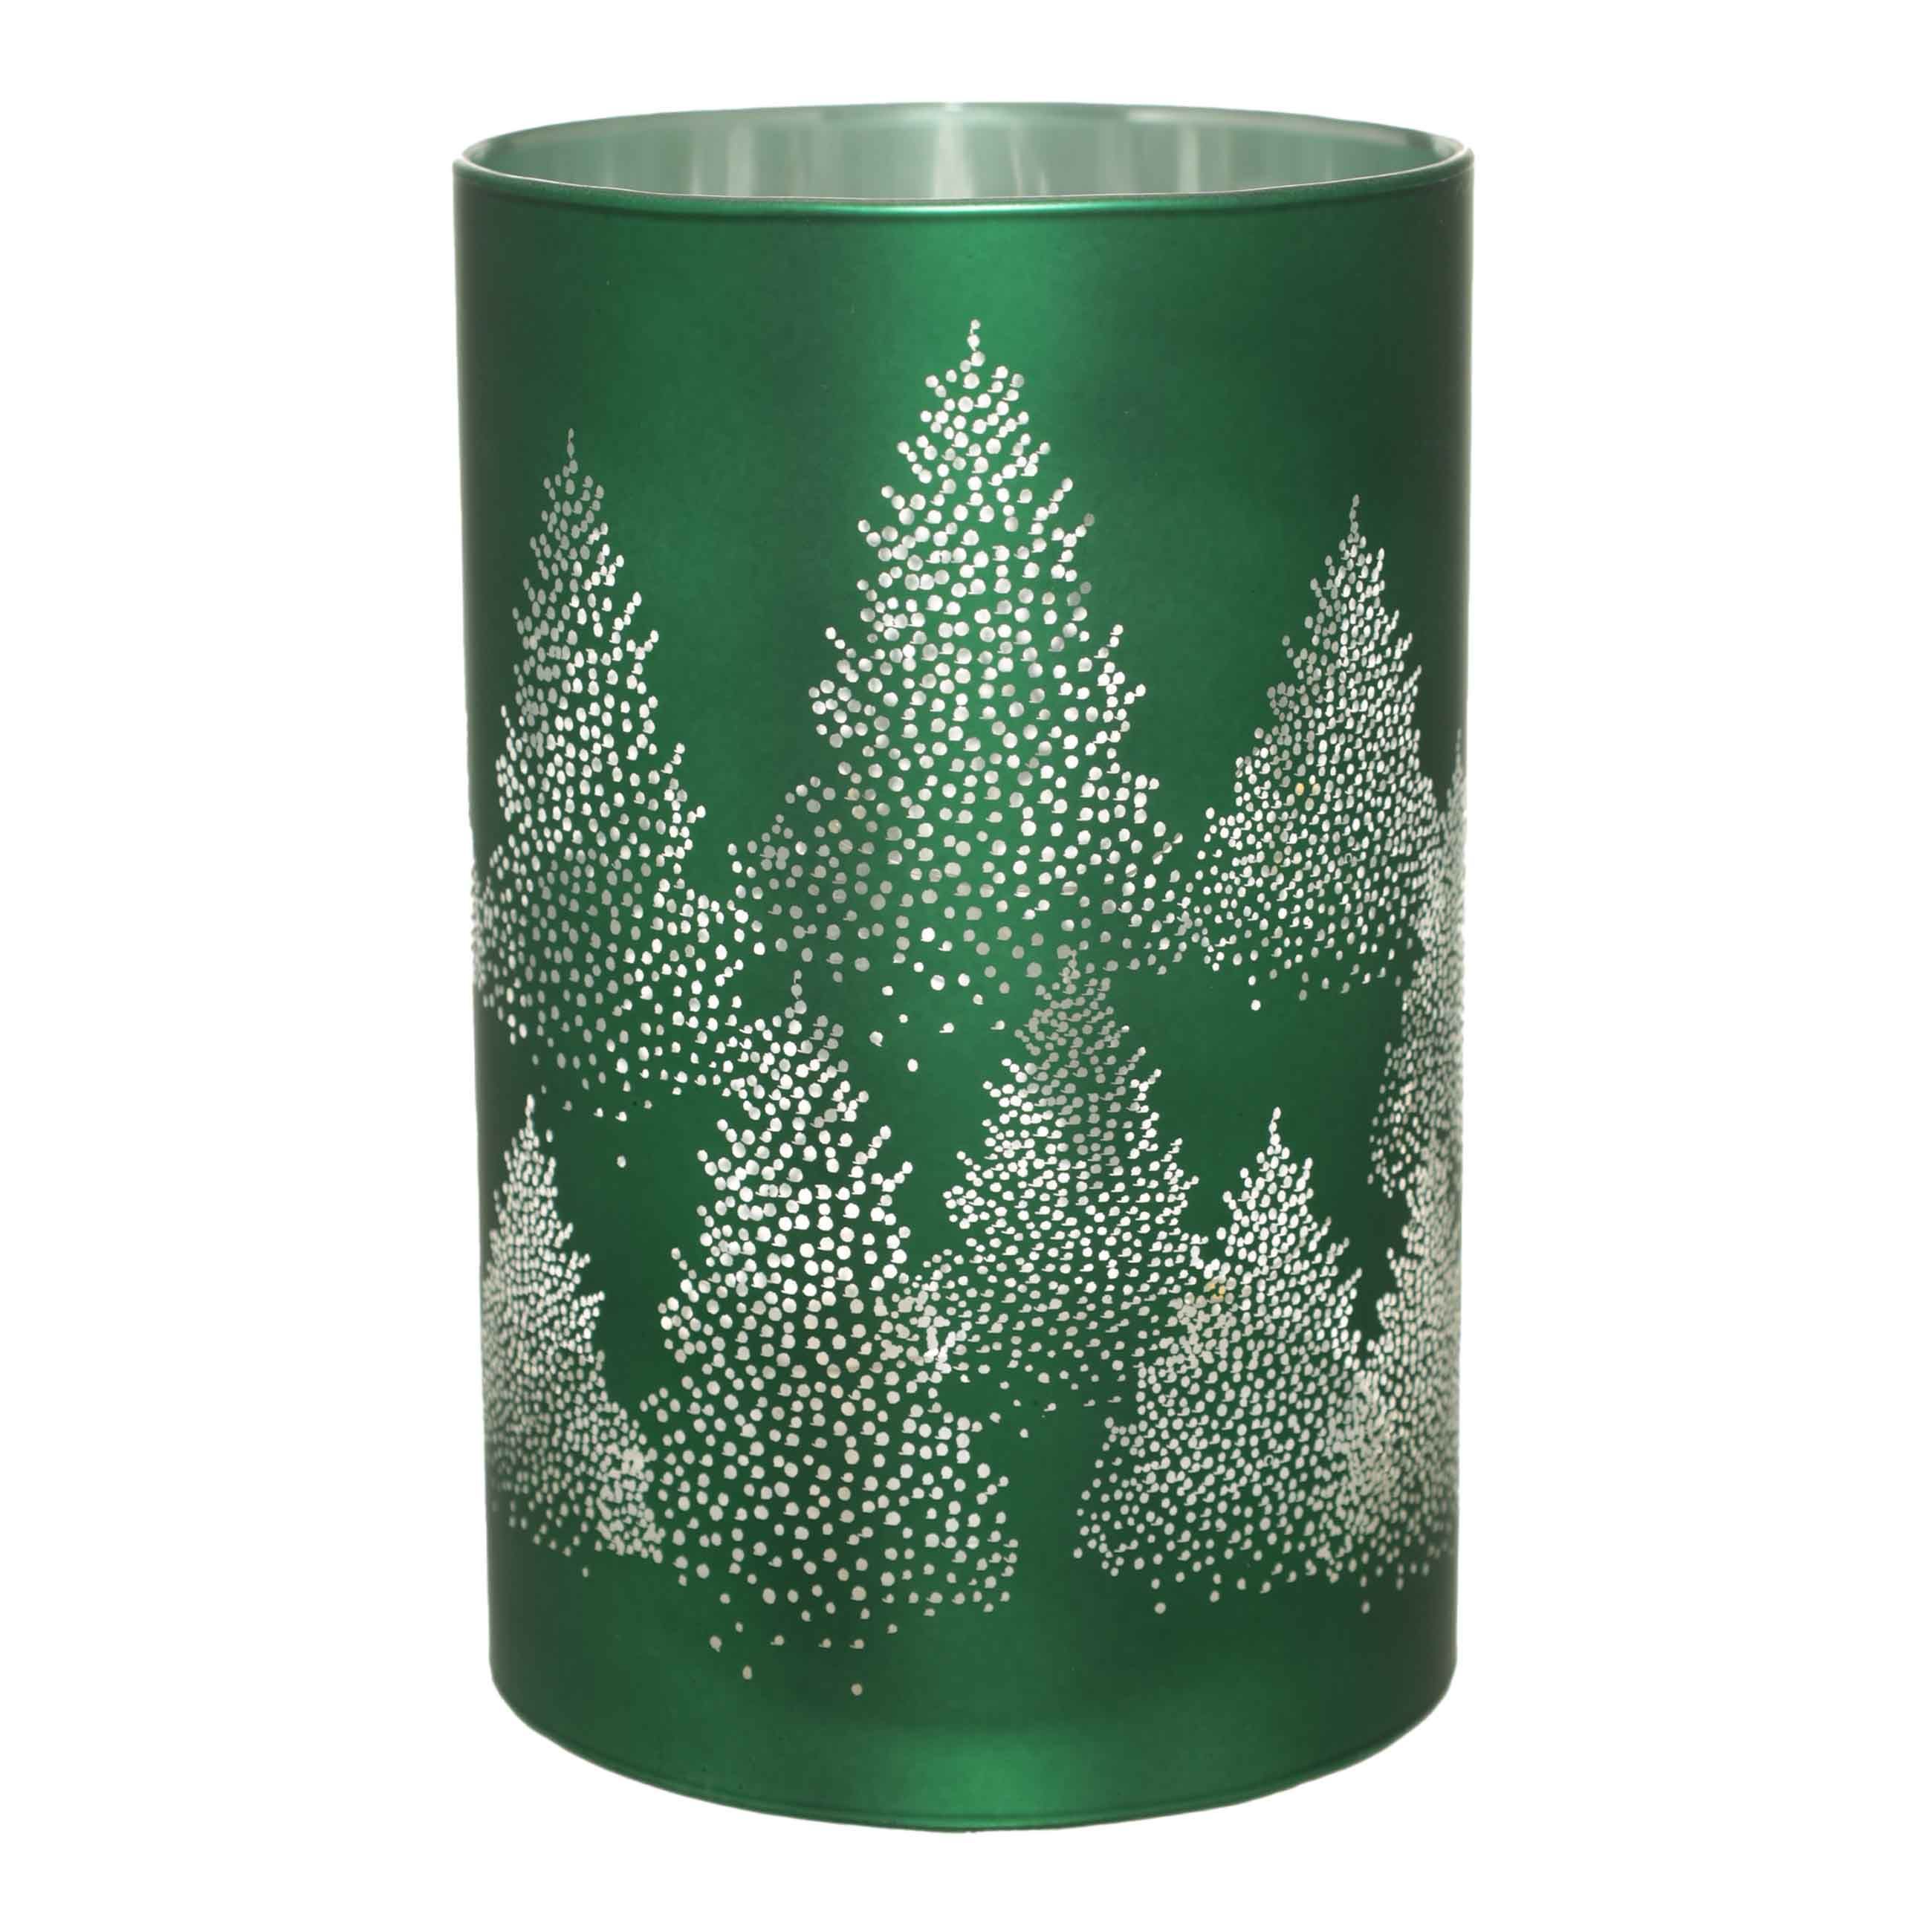 Светильник декоративный, 14 см, стекло/пластик, зелено-серебристый, Лес, Woodland story